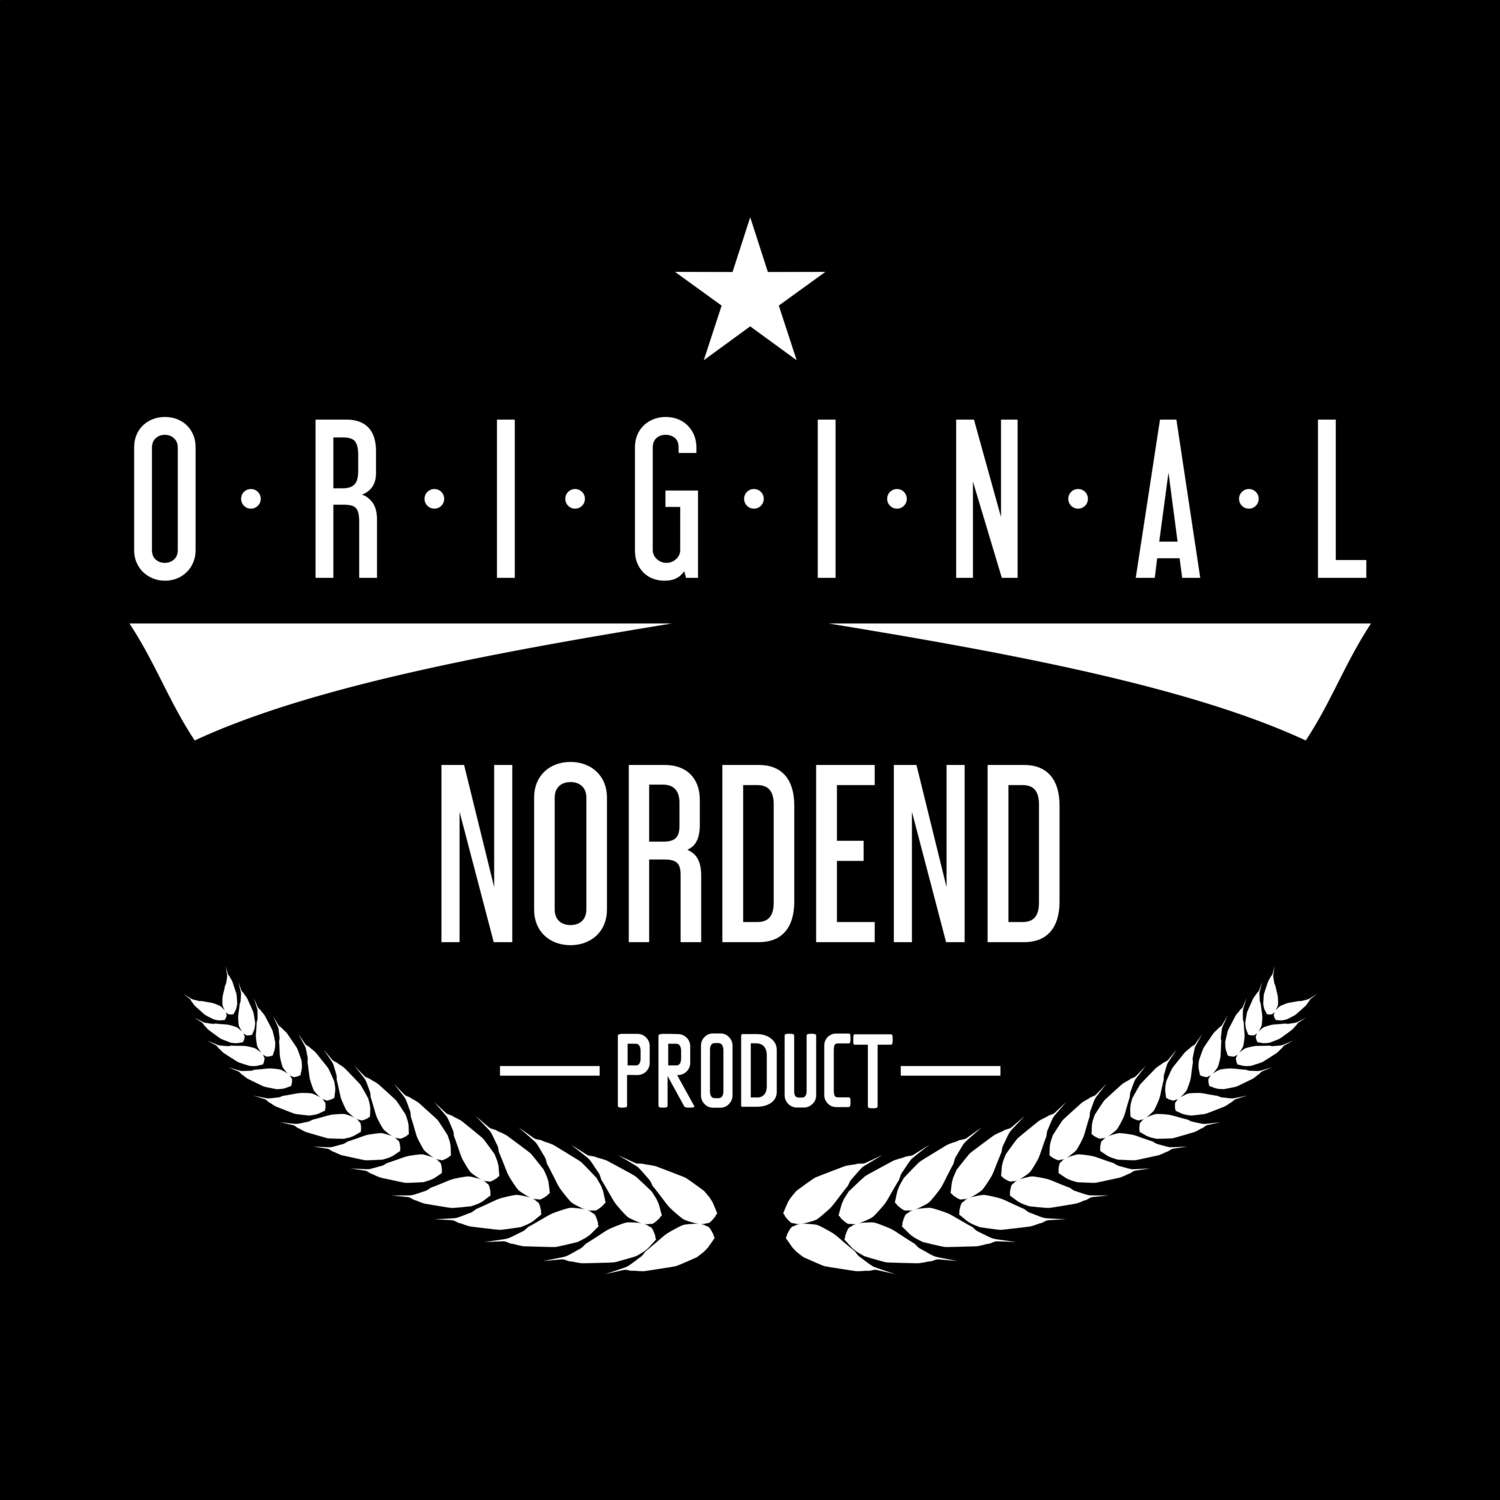 Nordend T-Shirt »Original Product«